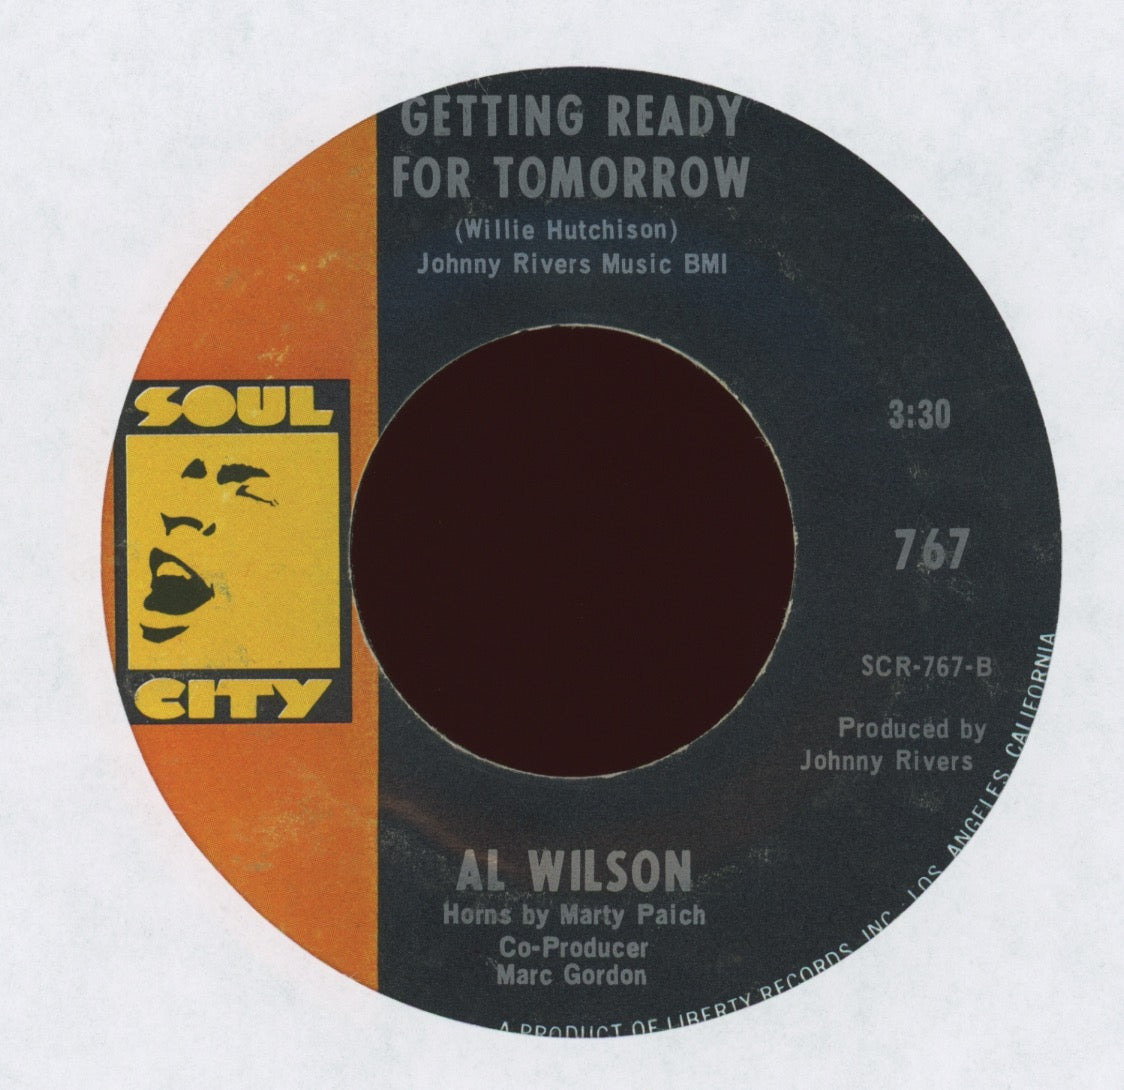 Al Wilson - The Snake on Soul City